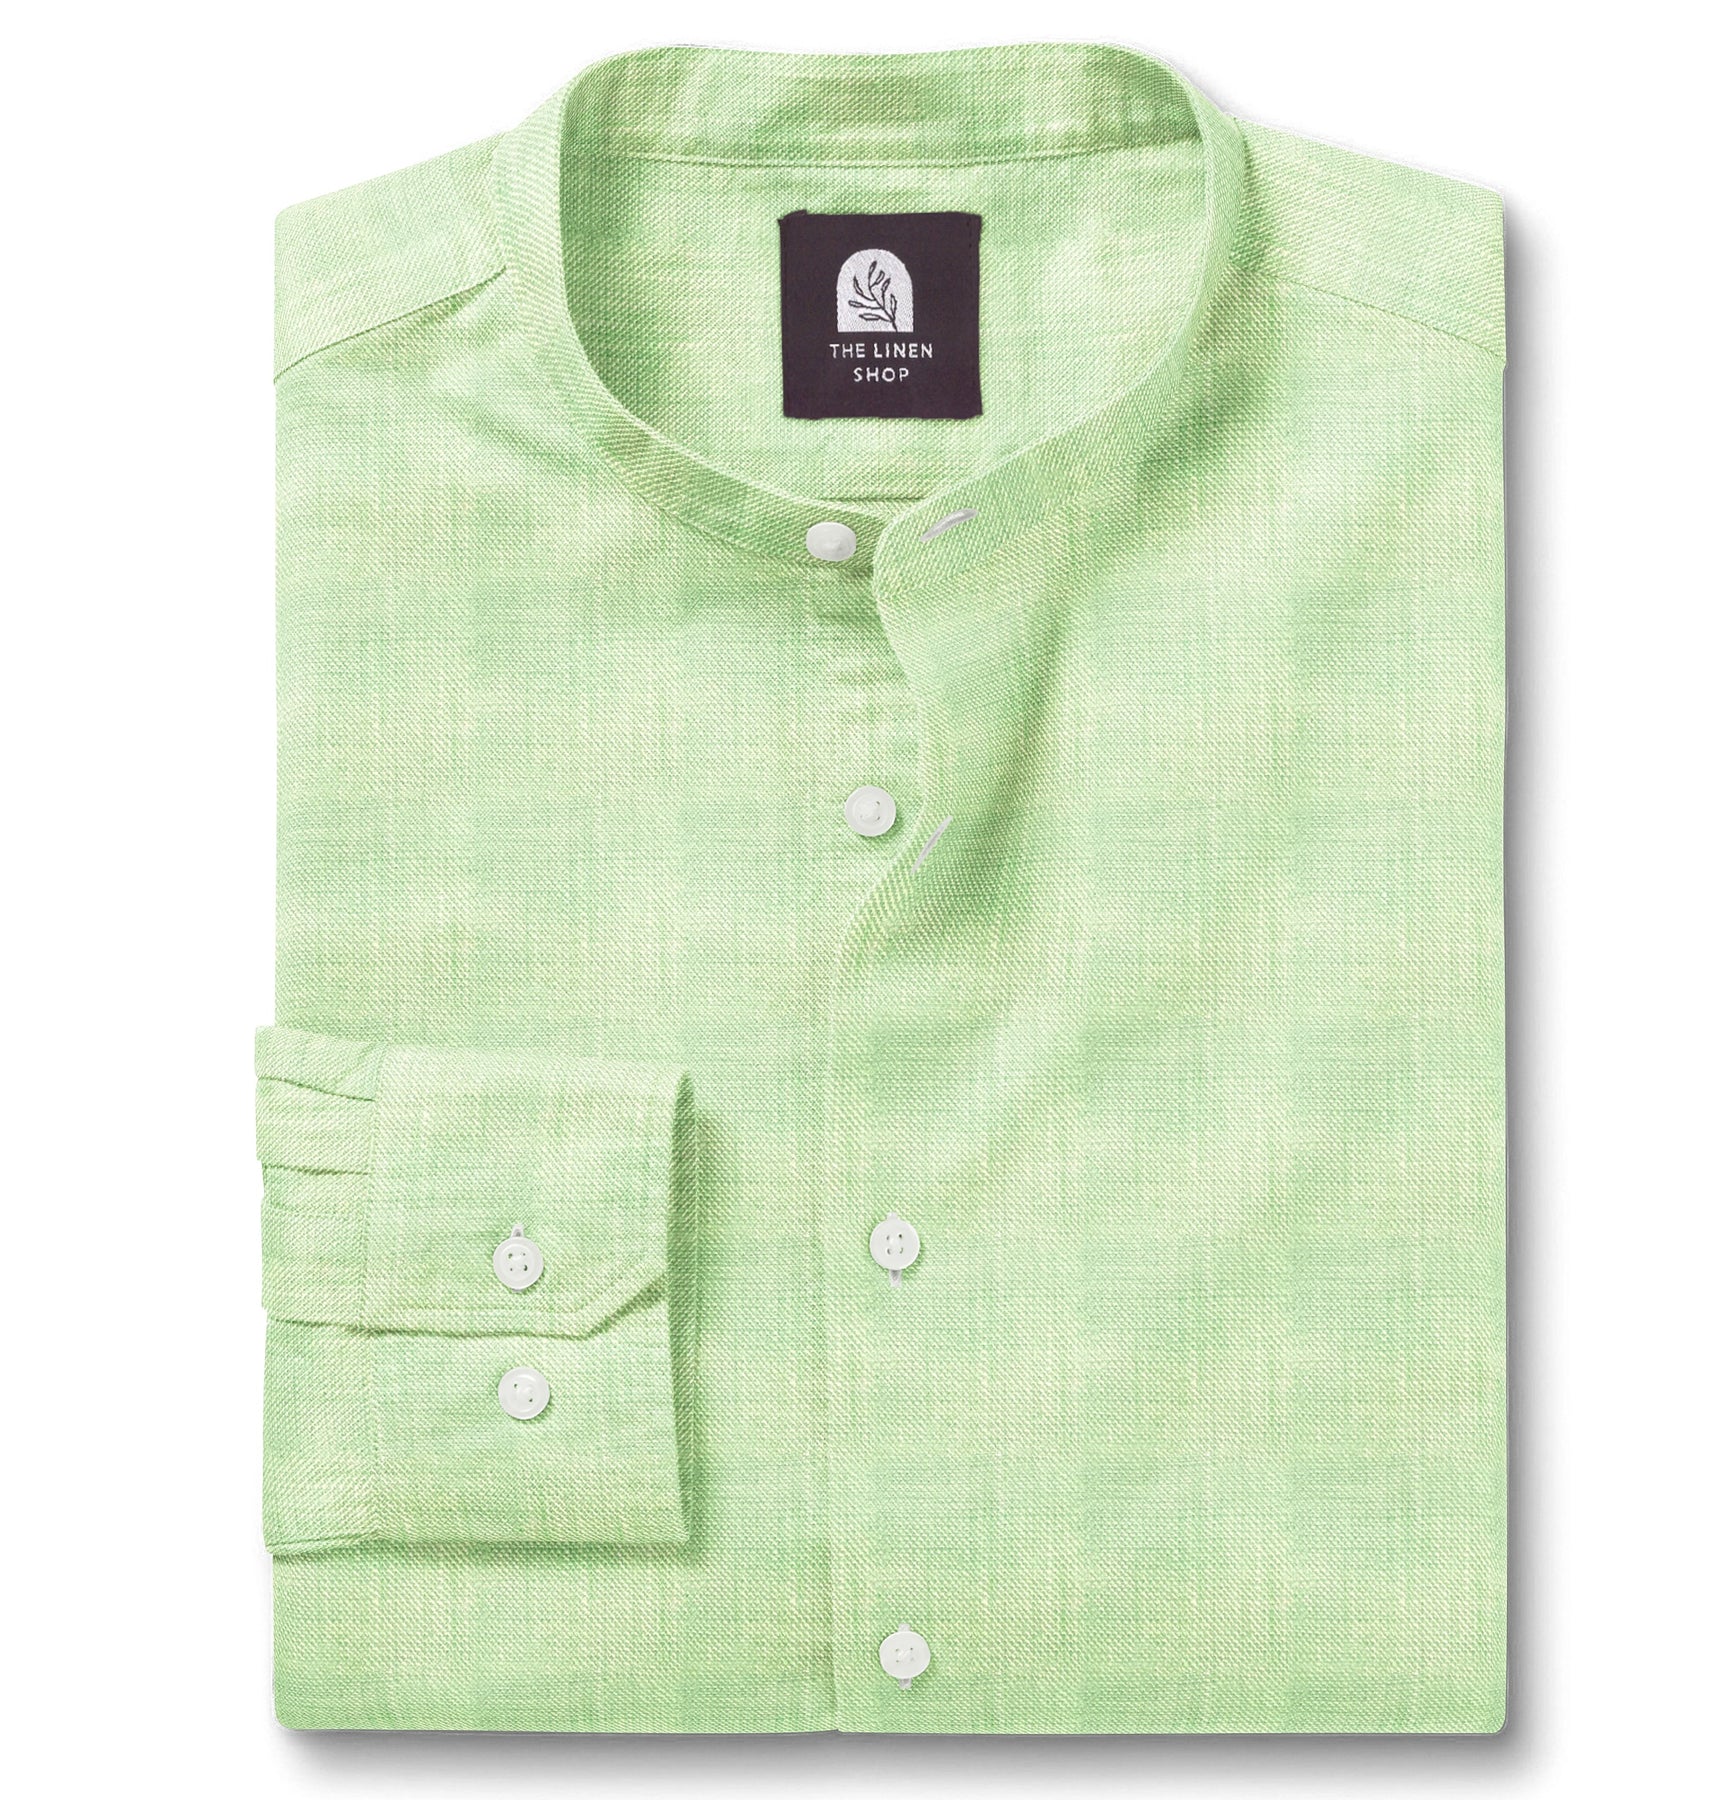 Men Shirt Cotton Linen Fabric, Light Green at Rs 170/meter in Namakkal